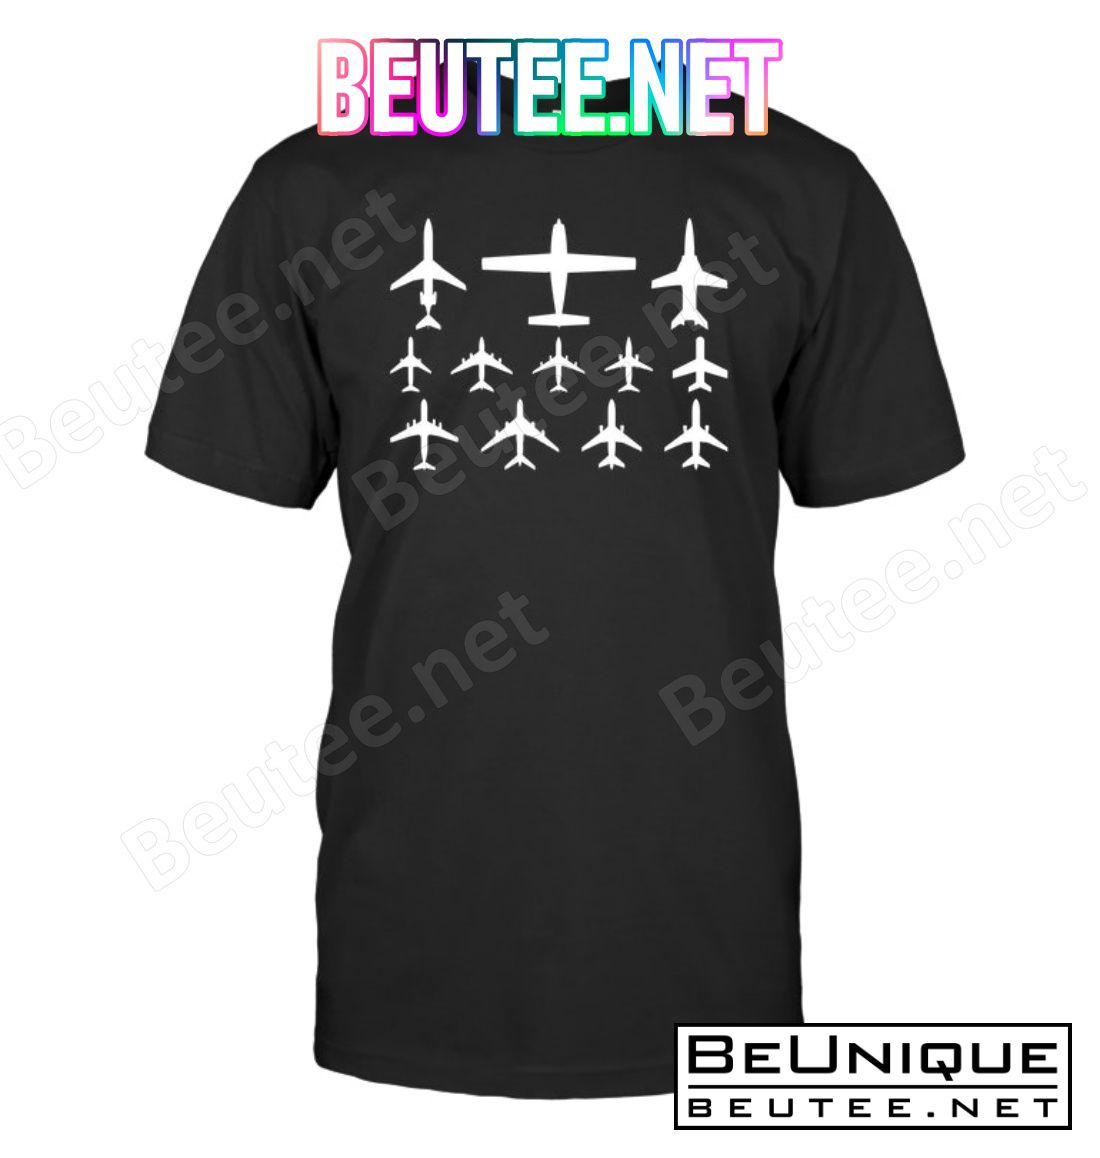 Planes Lined Up Horizontally Shirt